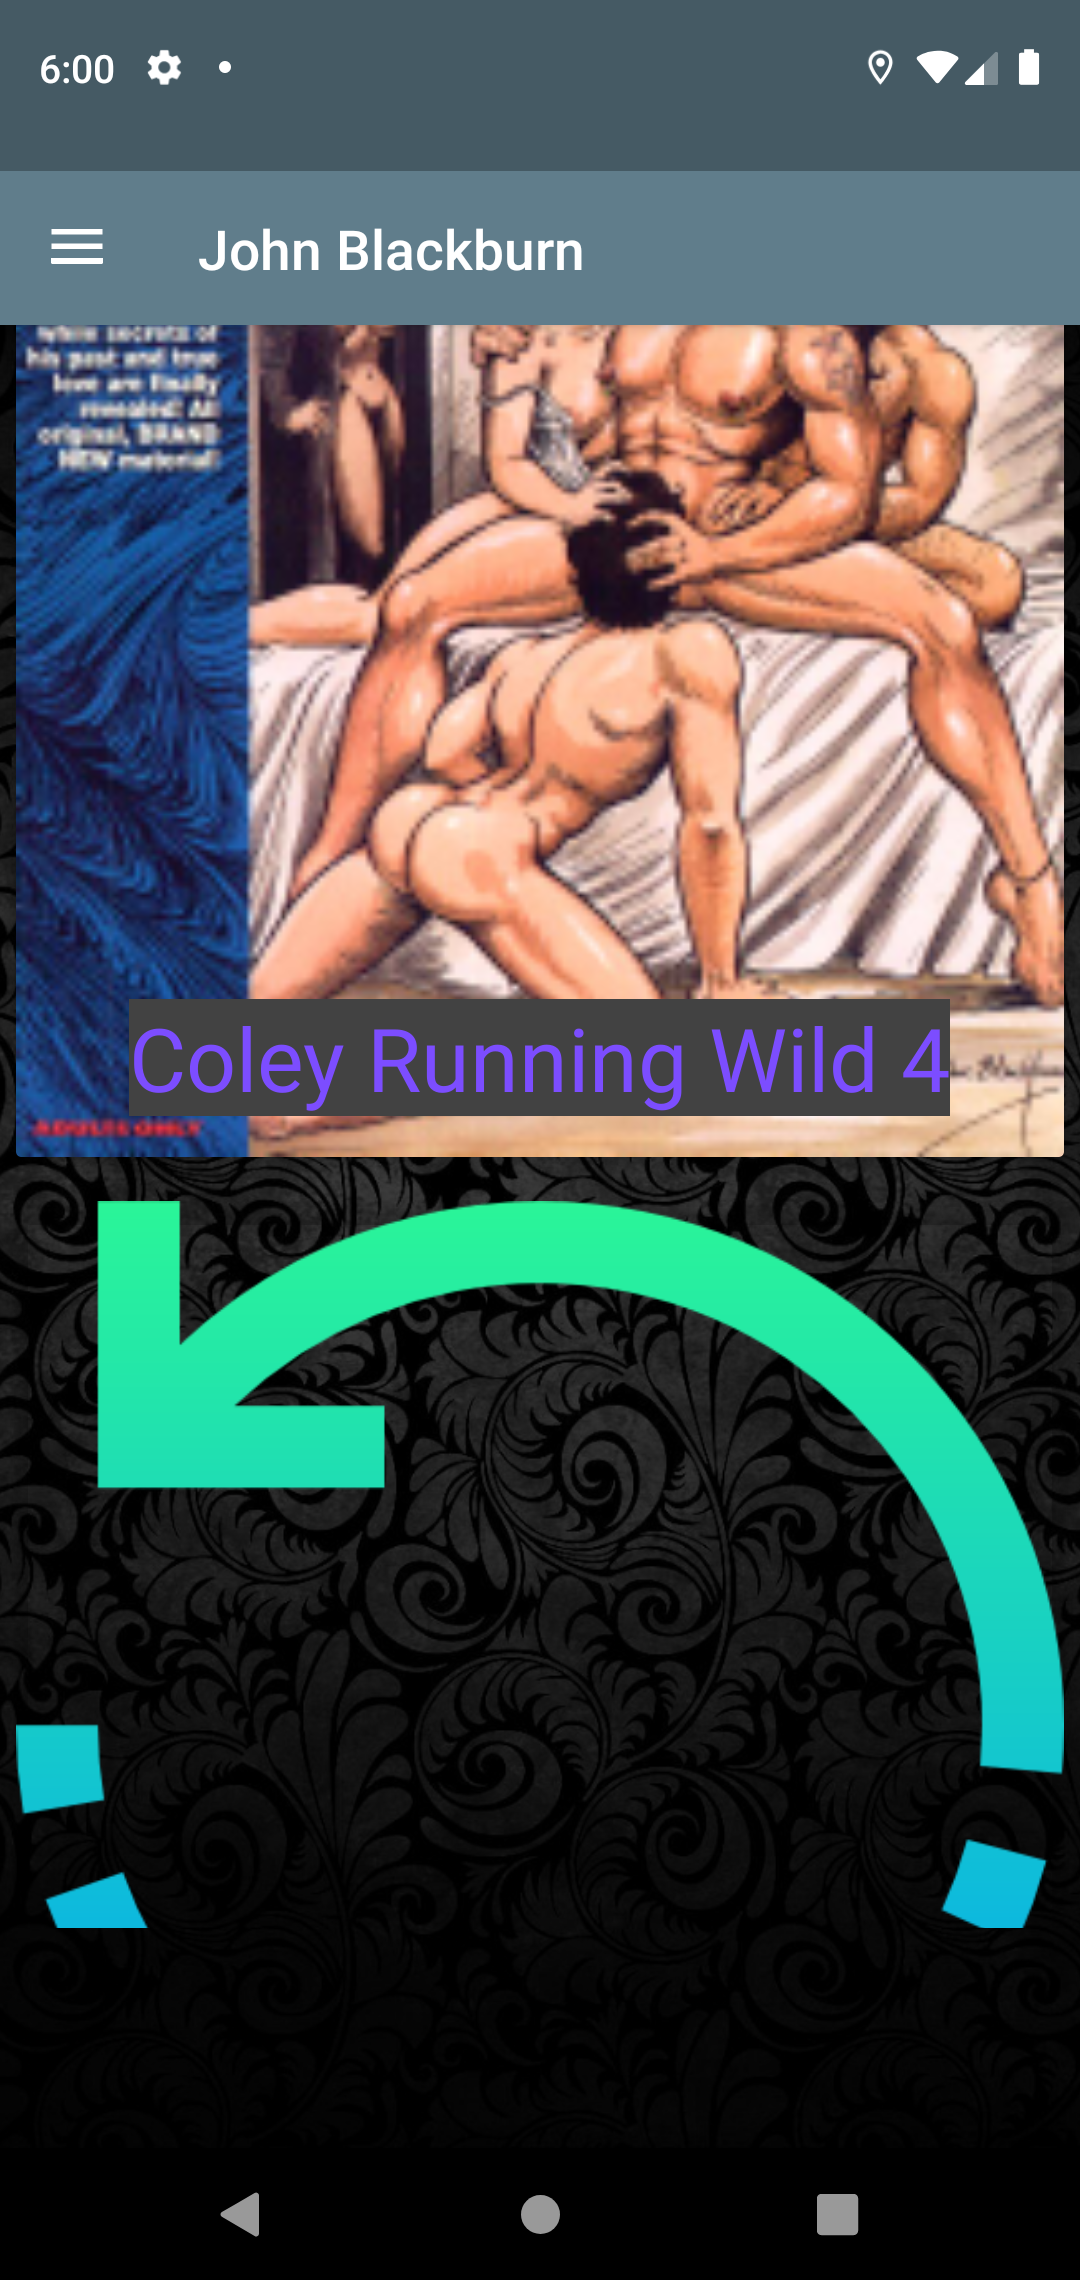 Coley Running Wild pics,hentai,phone,pictures,comics,gallery,download,apps,bondage,blackburn,punishment,futanari,titty,tuesday,porn,gay,photos,comic,hentia,app,android,pic,apk,wallpaper,time,hintai,images,john,yaoi